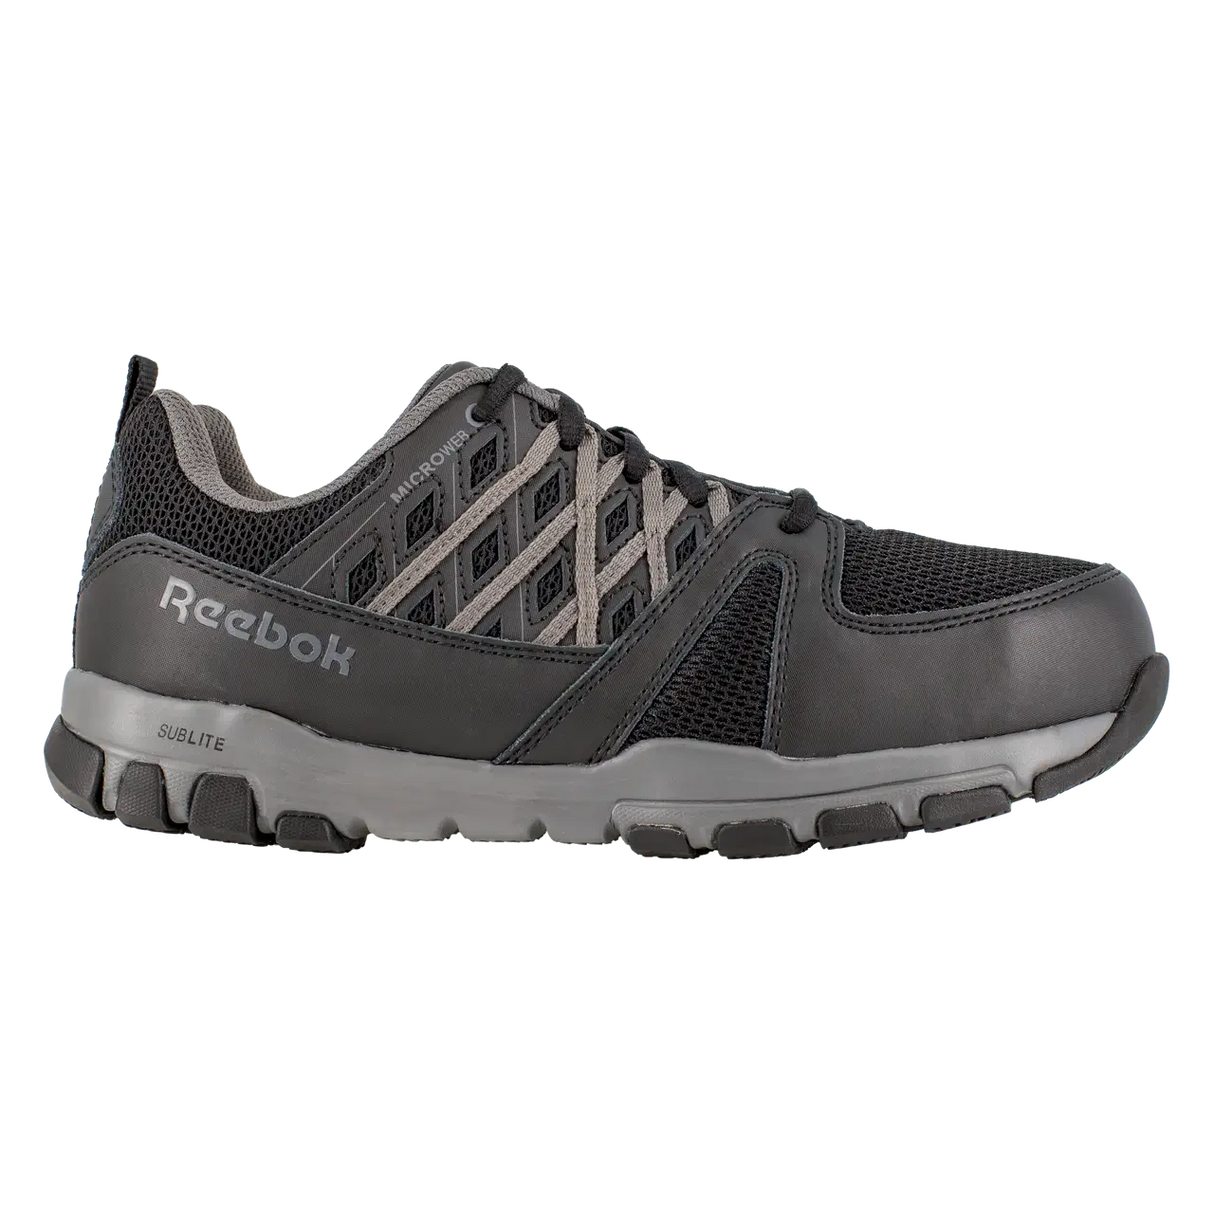 Reebok Women's Sublite Steel Toe Shoe Black with Grey RB416 side view